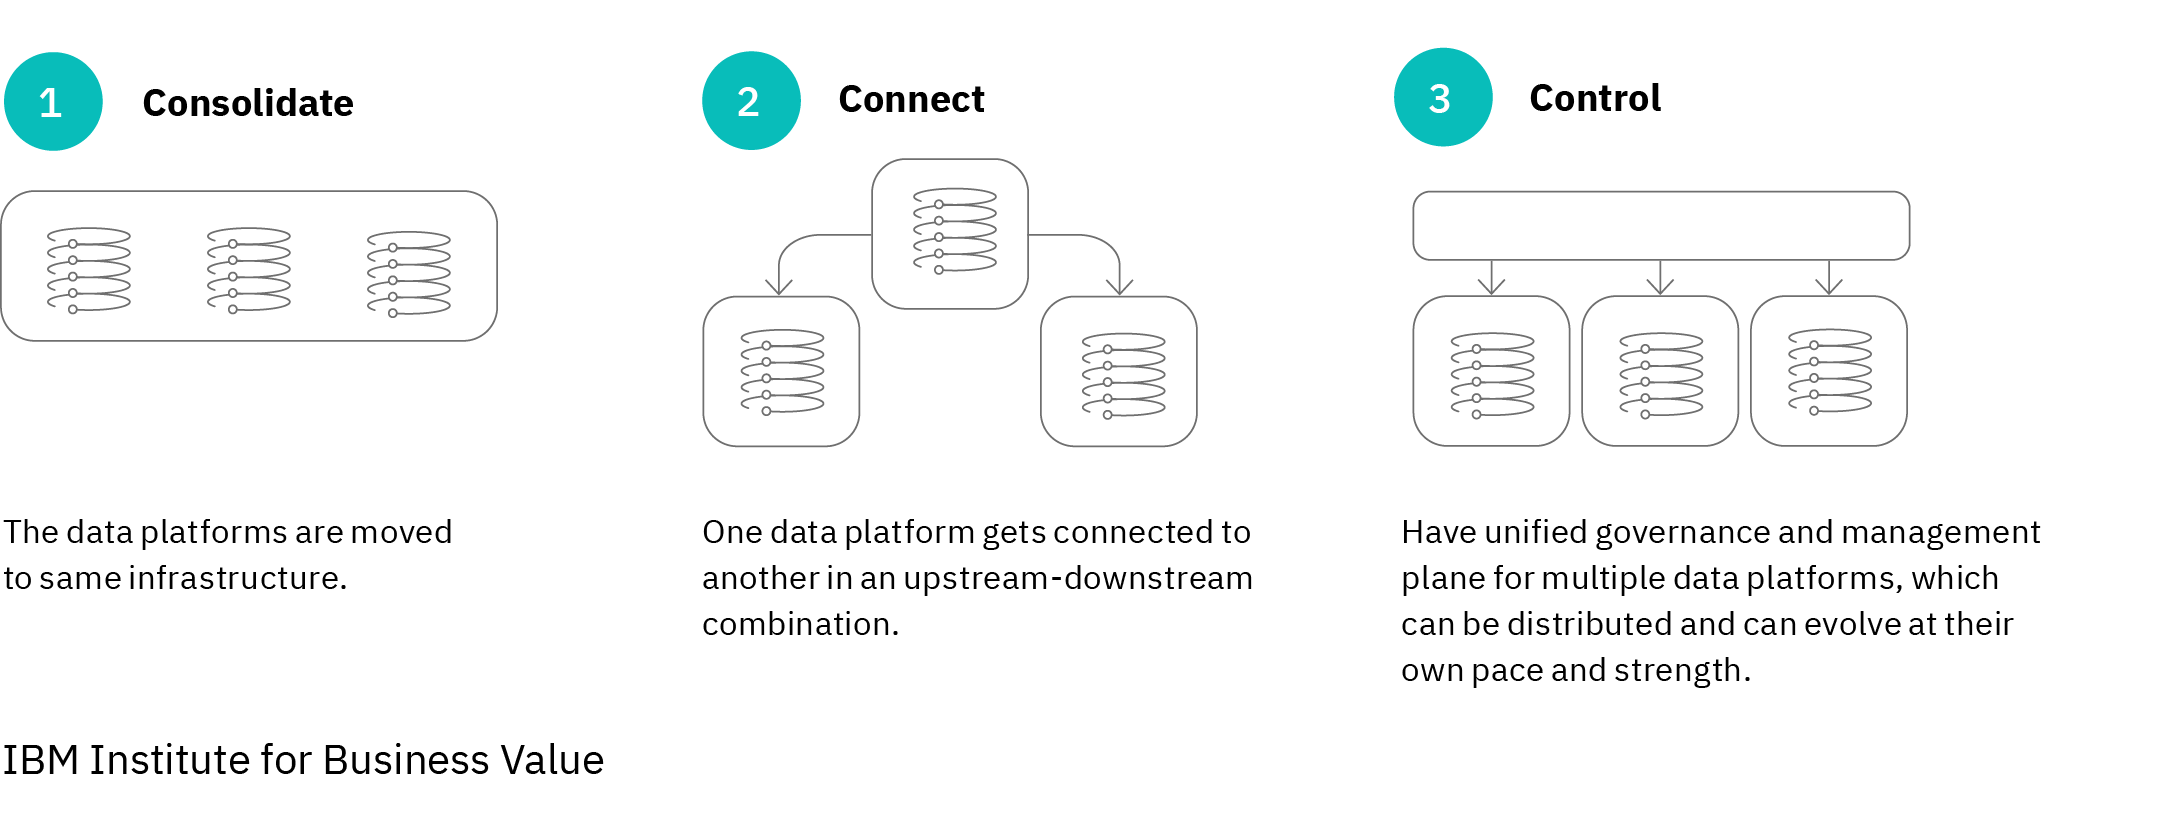 Boundary strategies: Three approaches for managing data platform boundaries